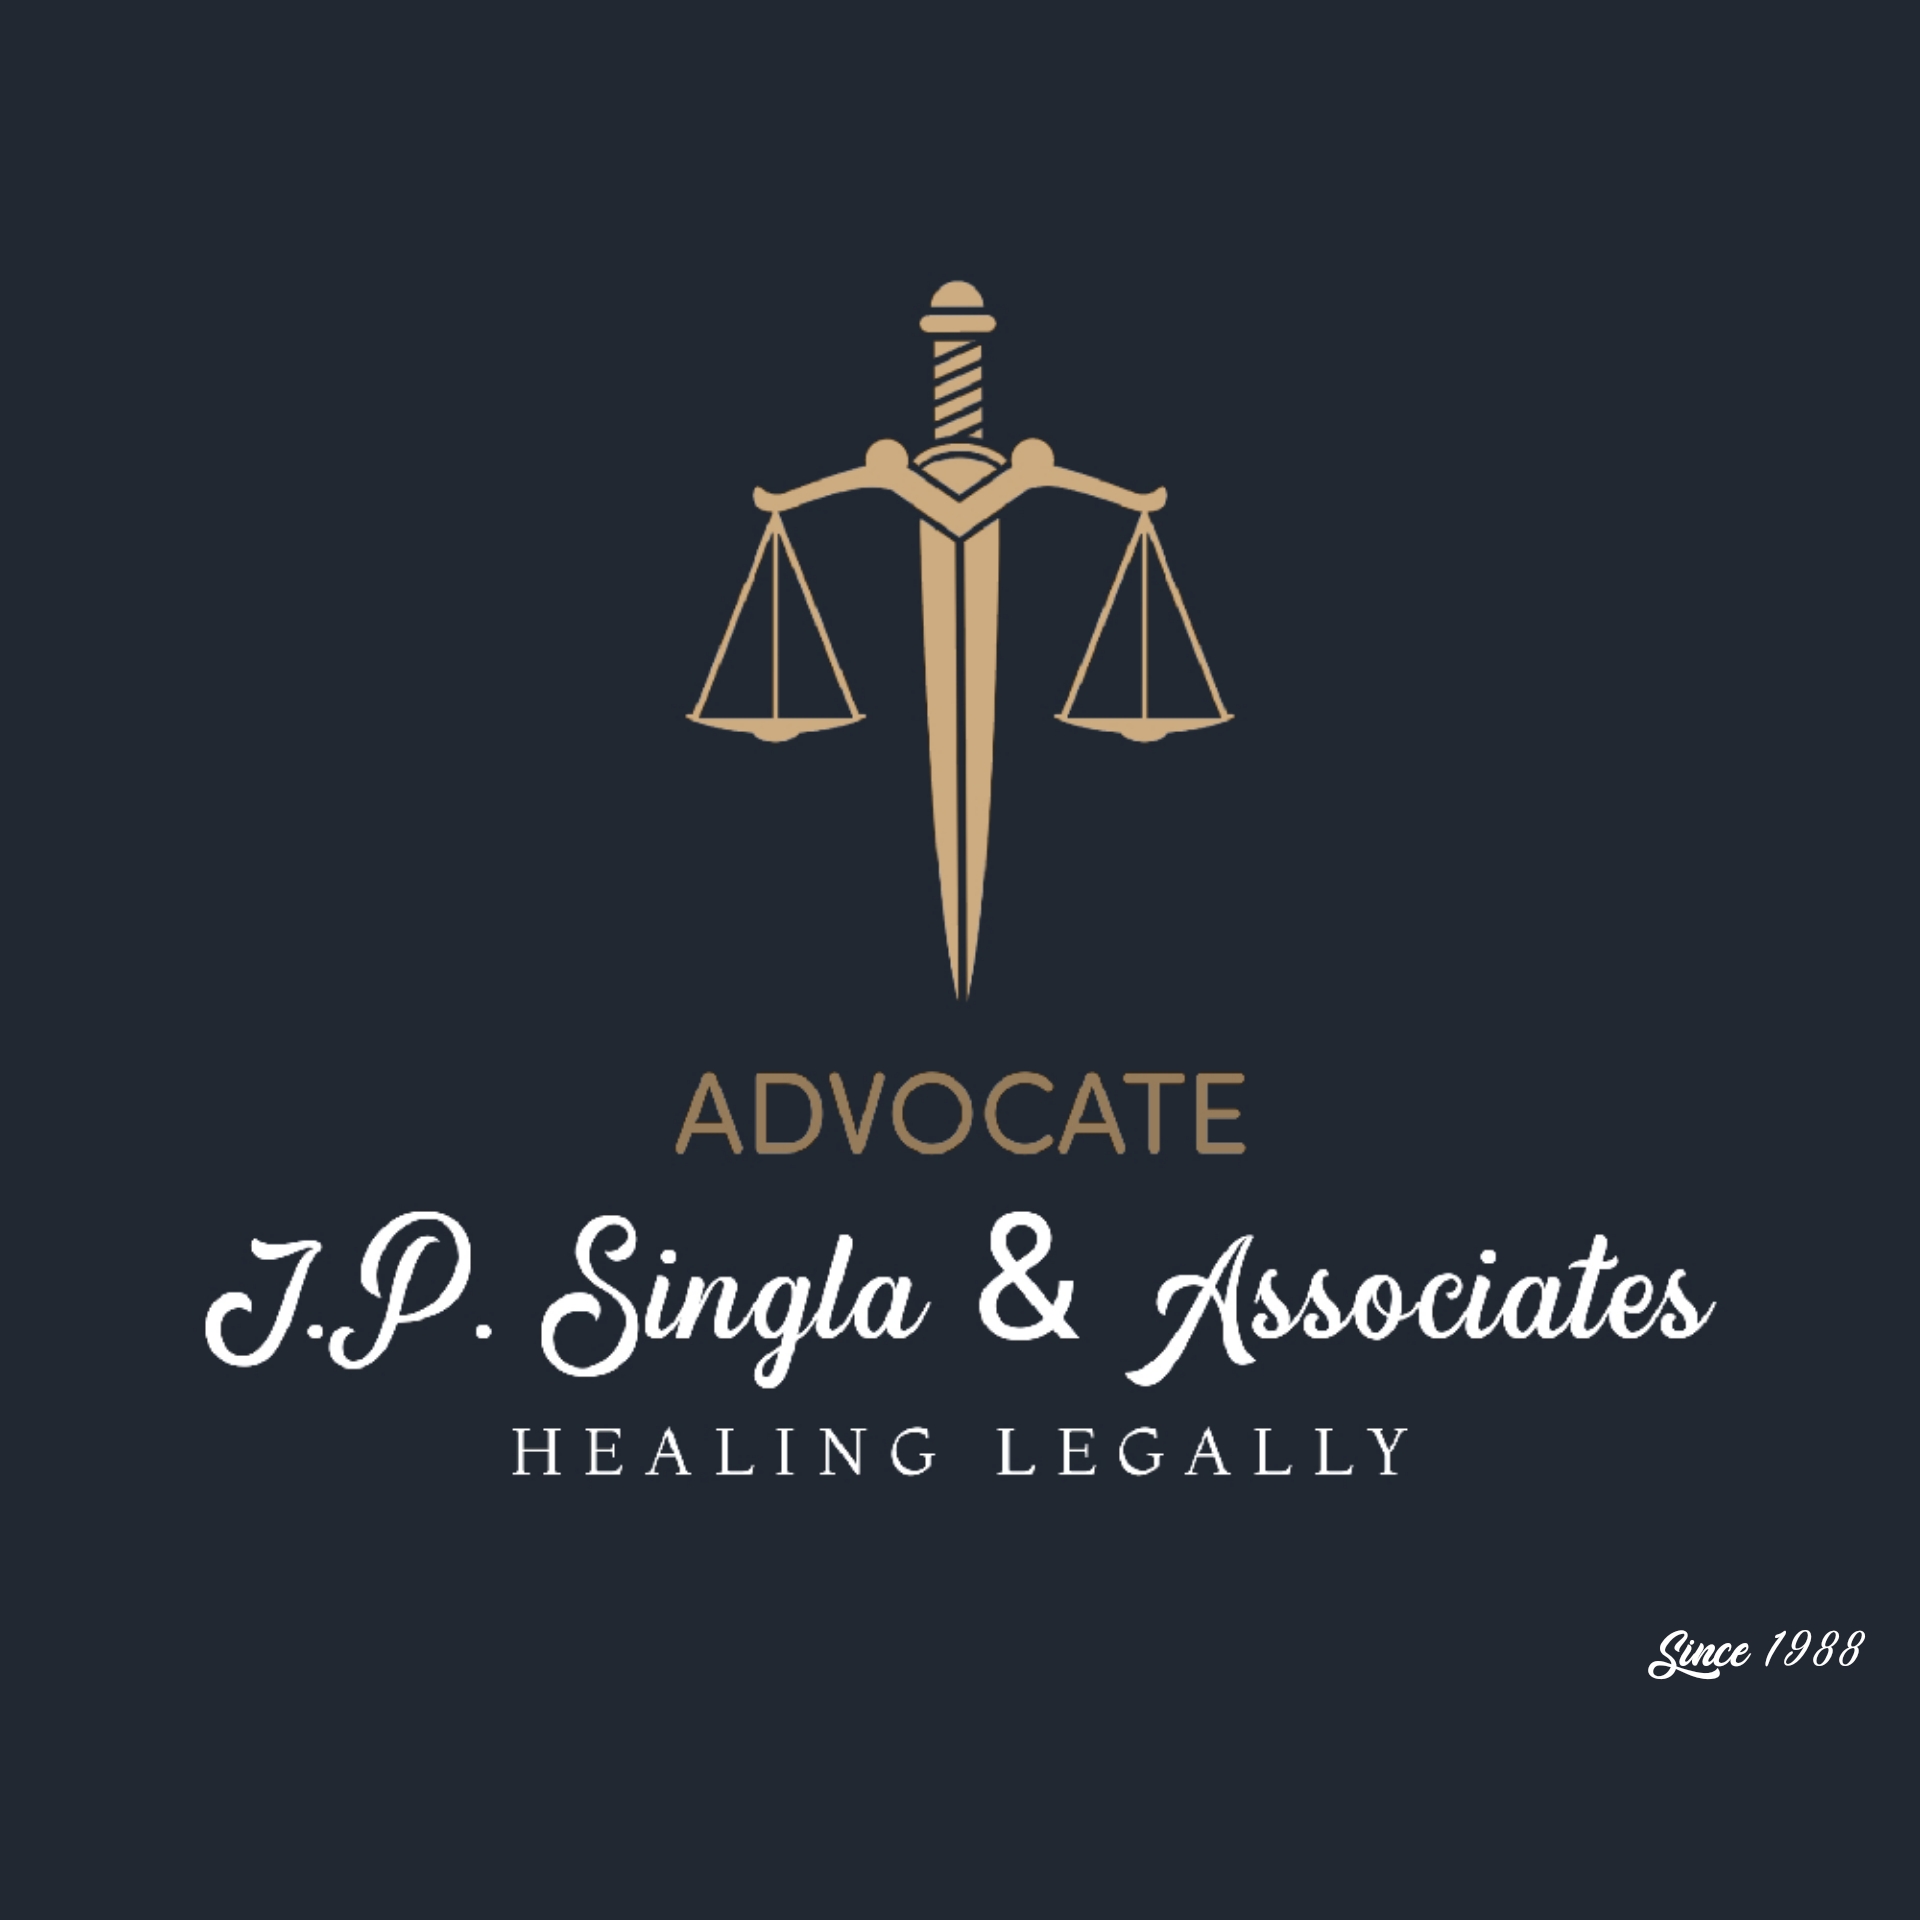 J.P. Singla and Associates|Legal Services|Professional Services